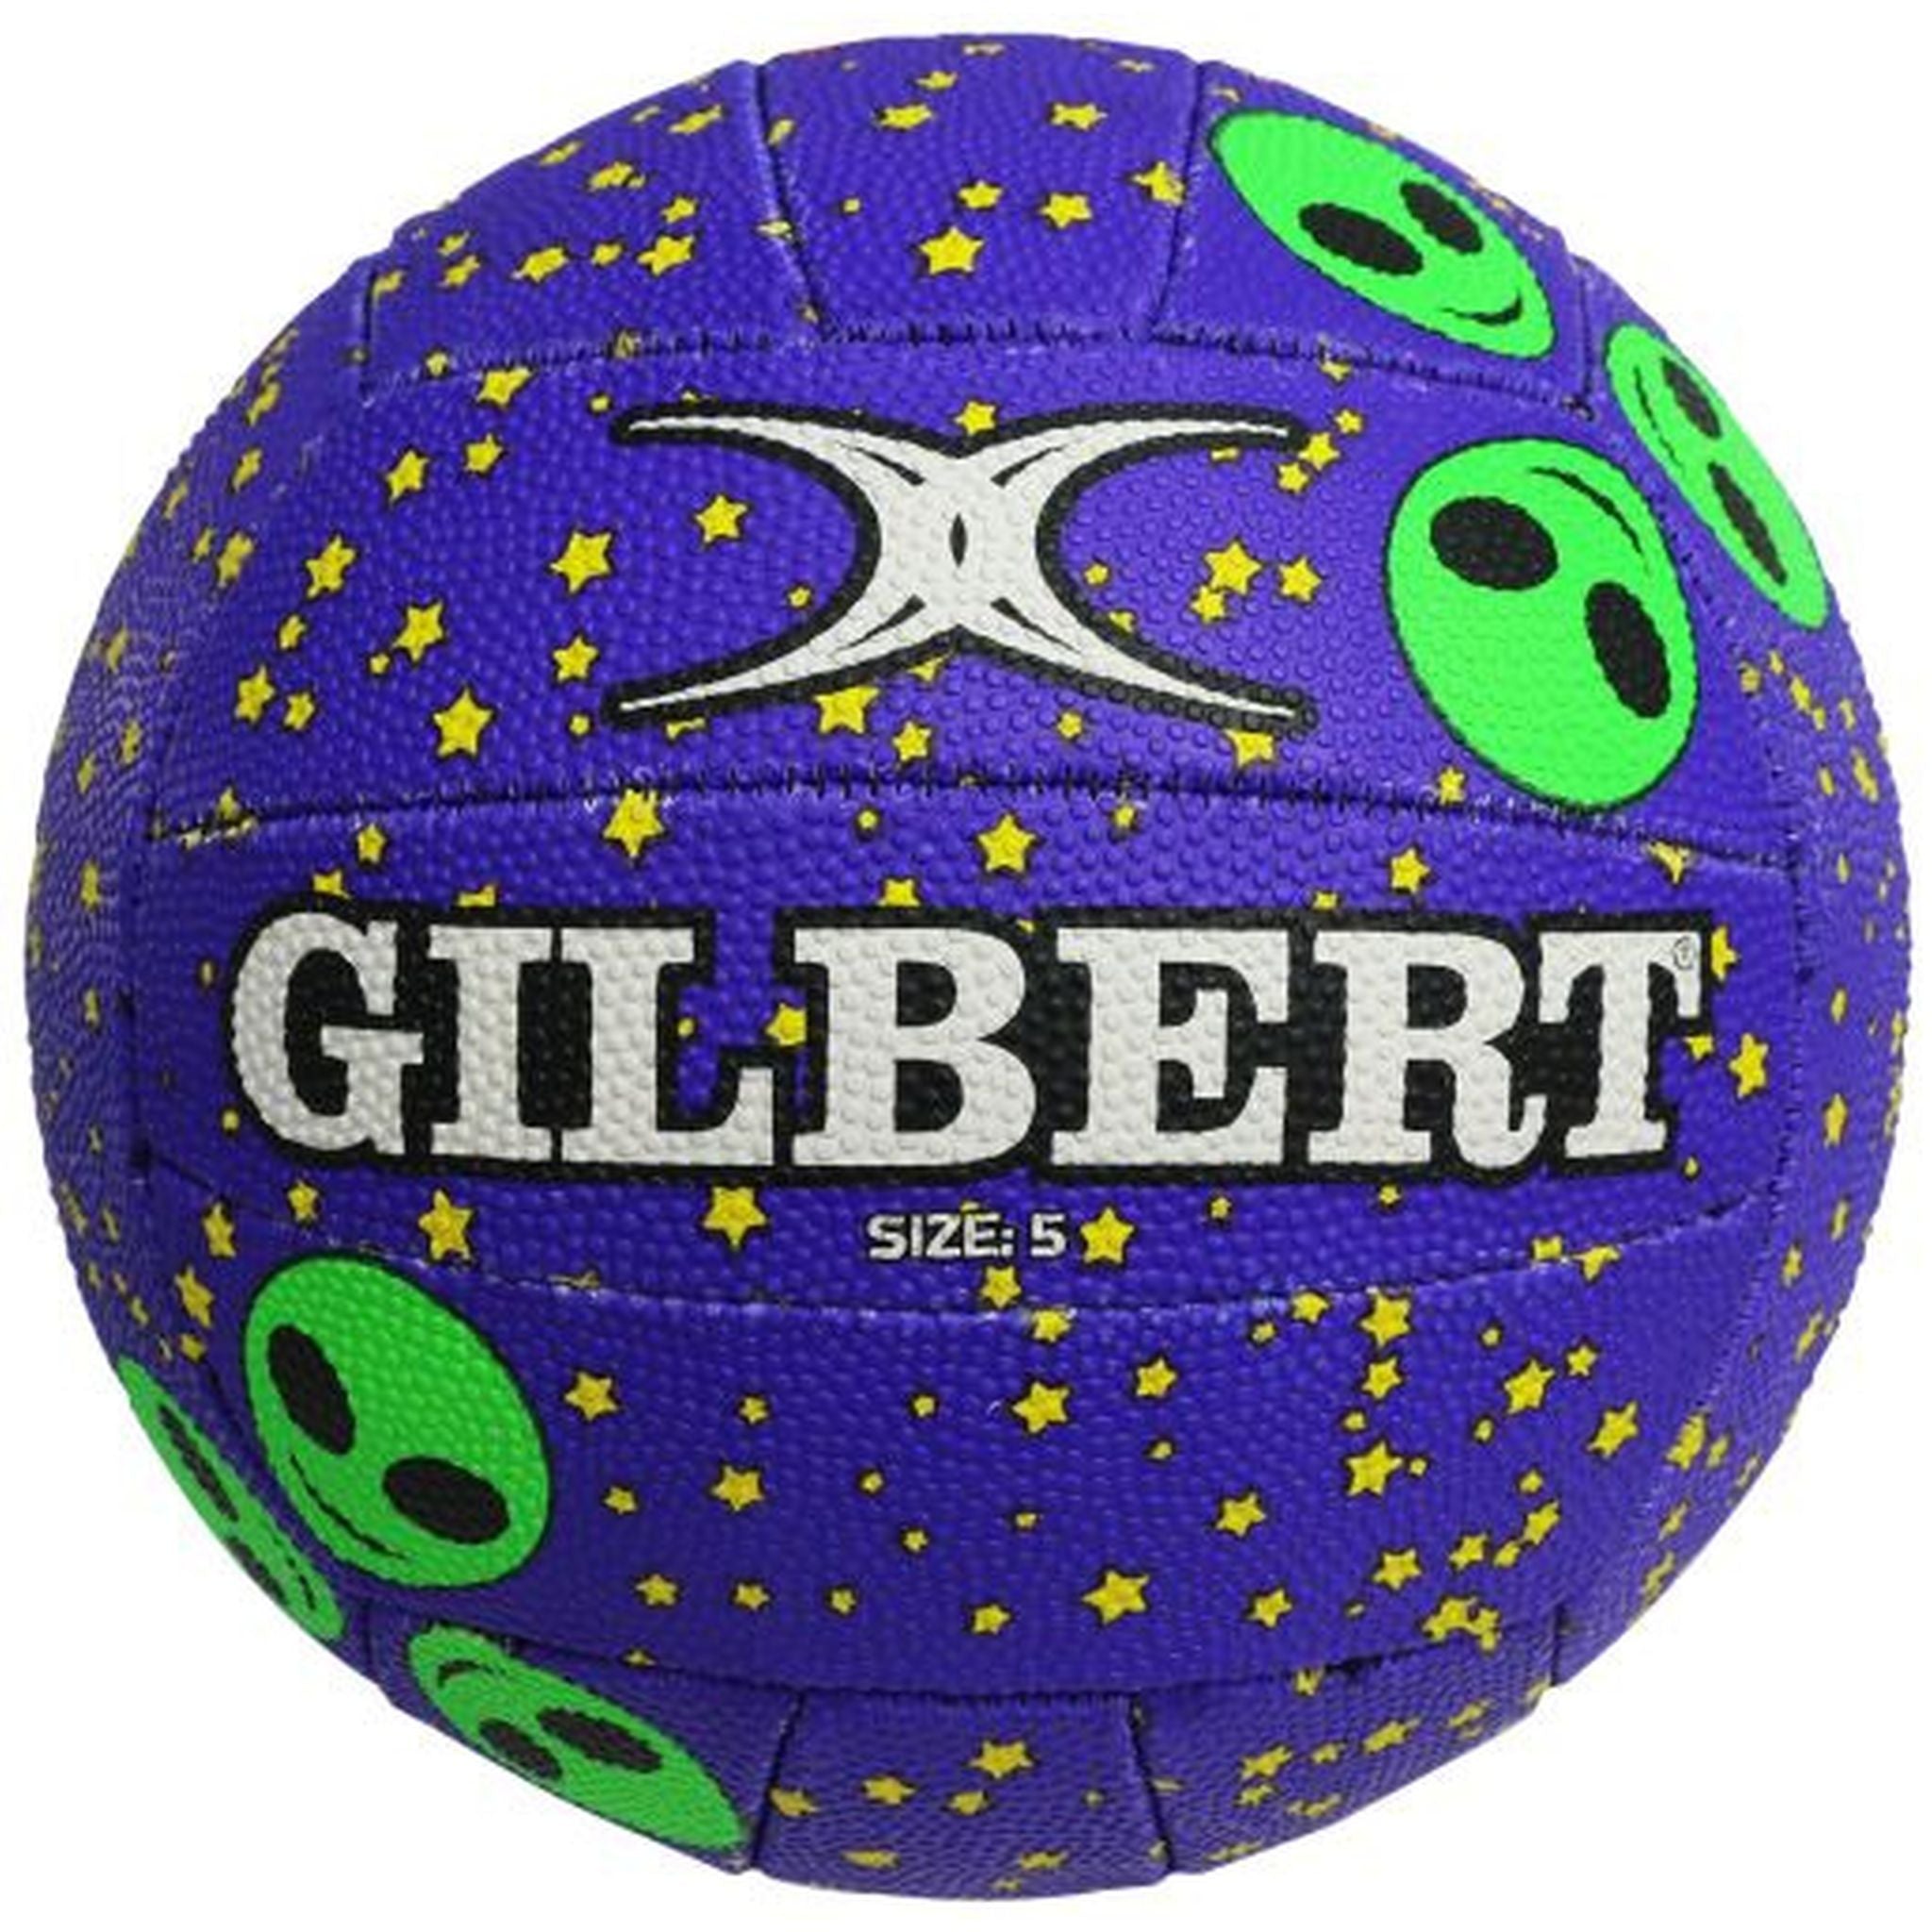 Gilbert Glam Outer Space Netball